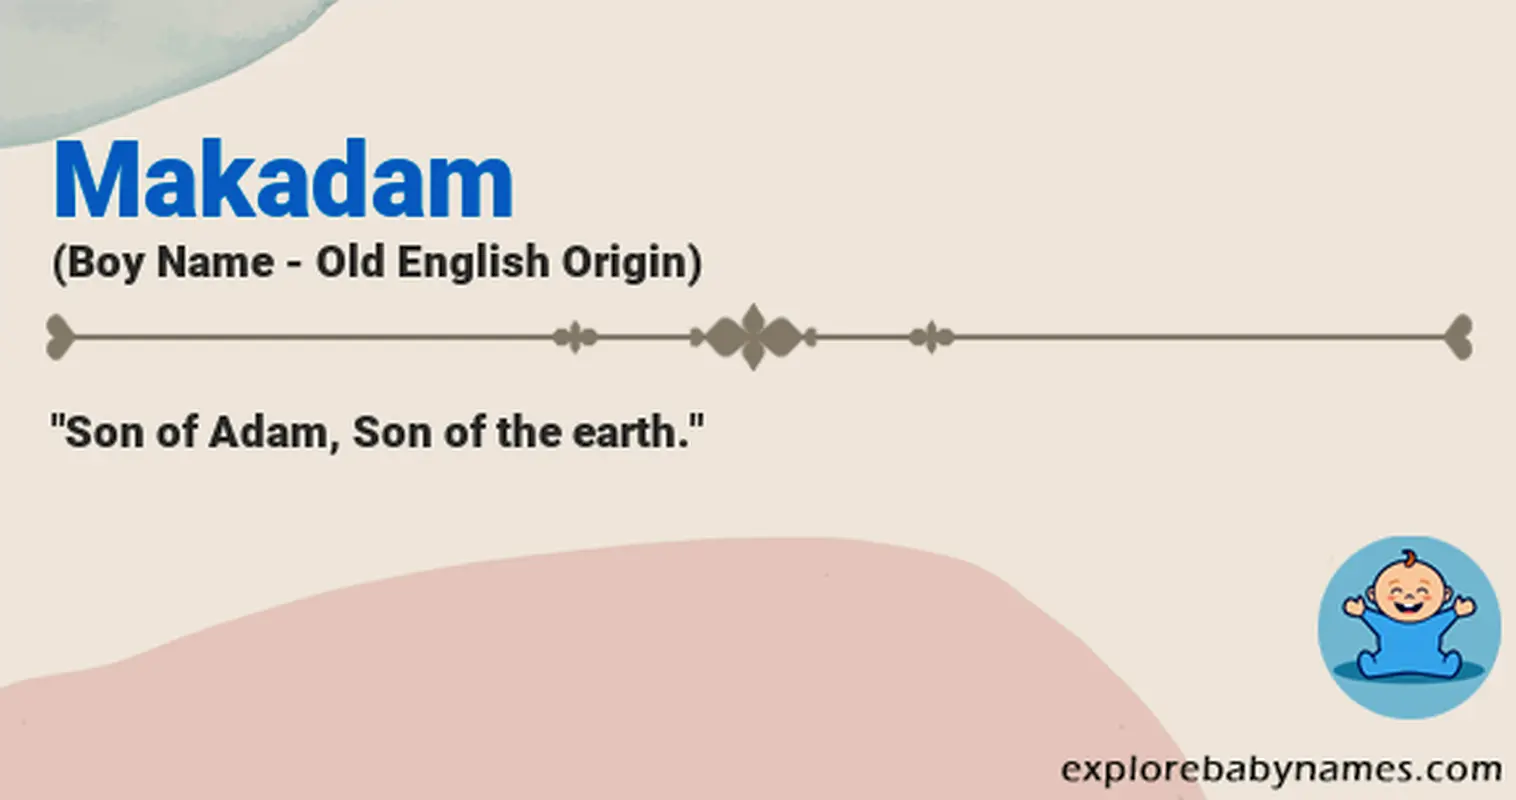 Meaning of Makadam